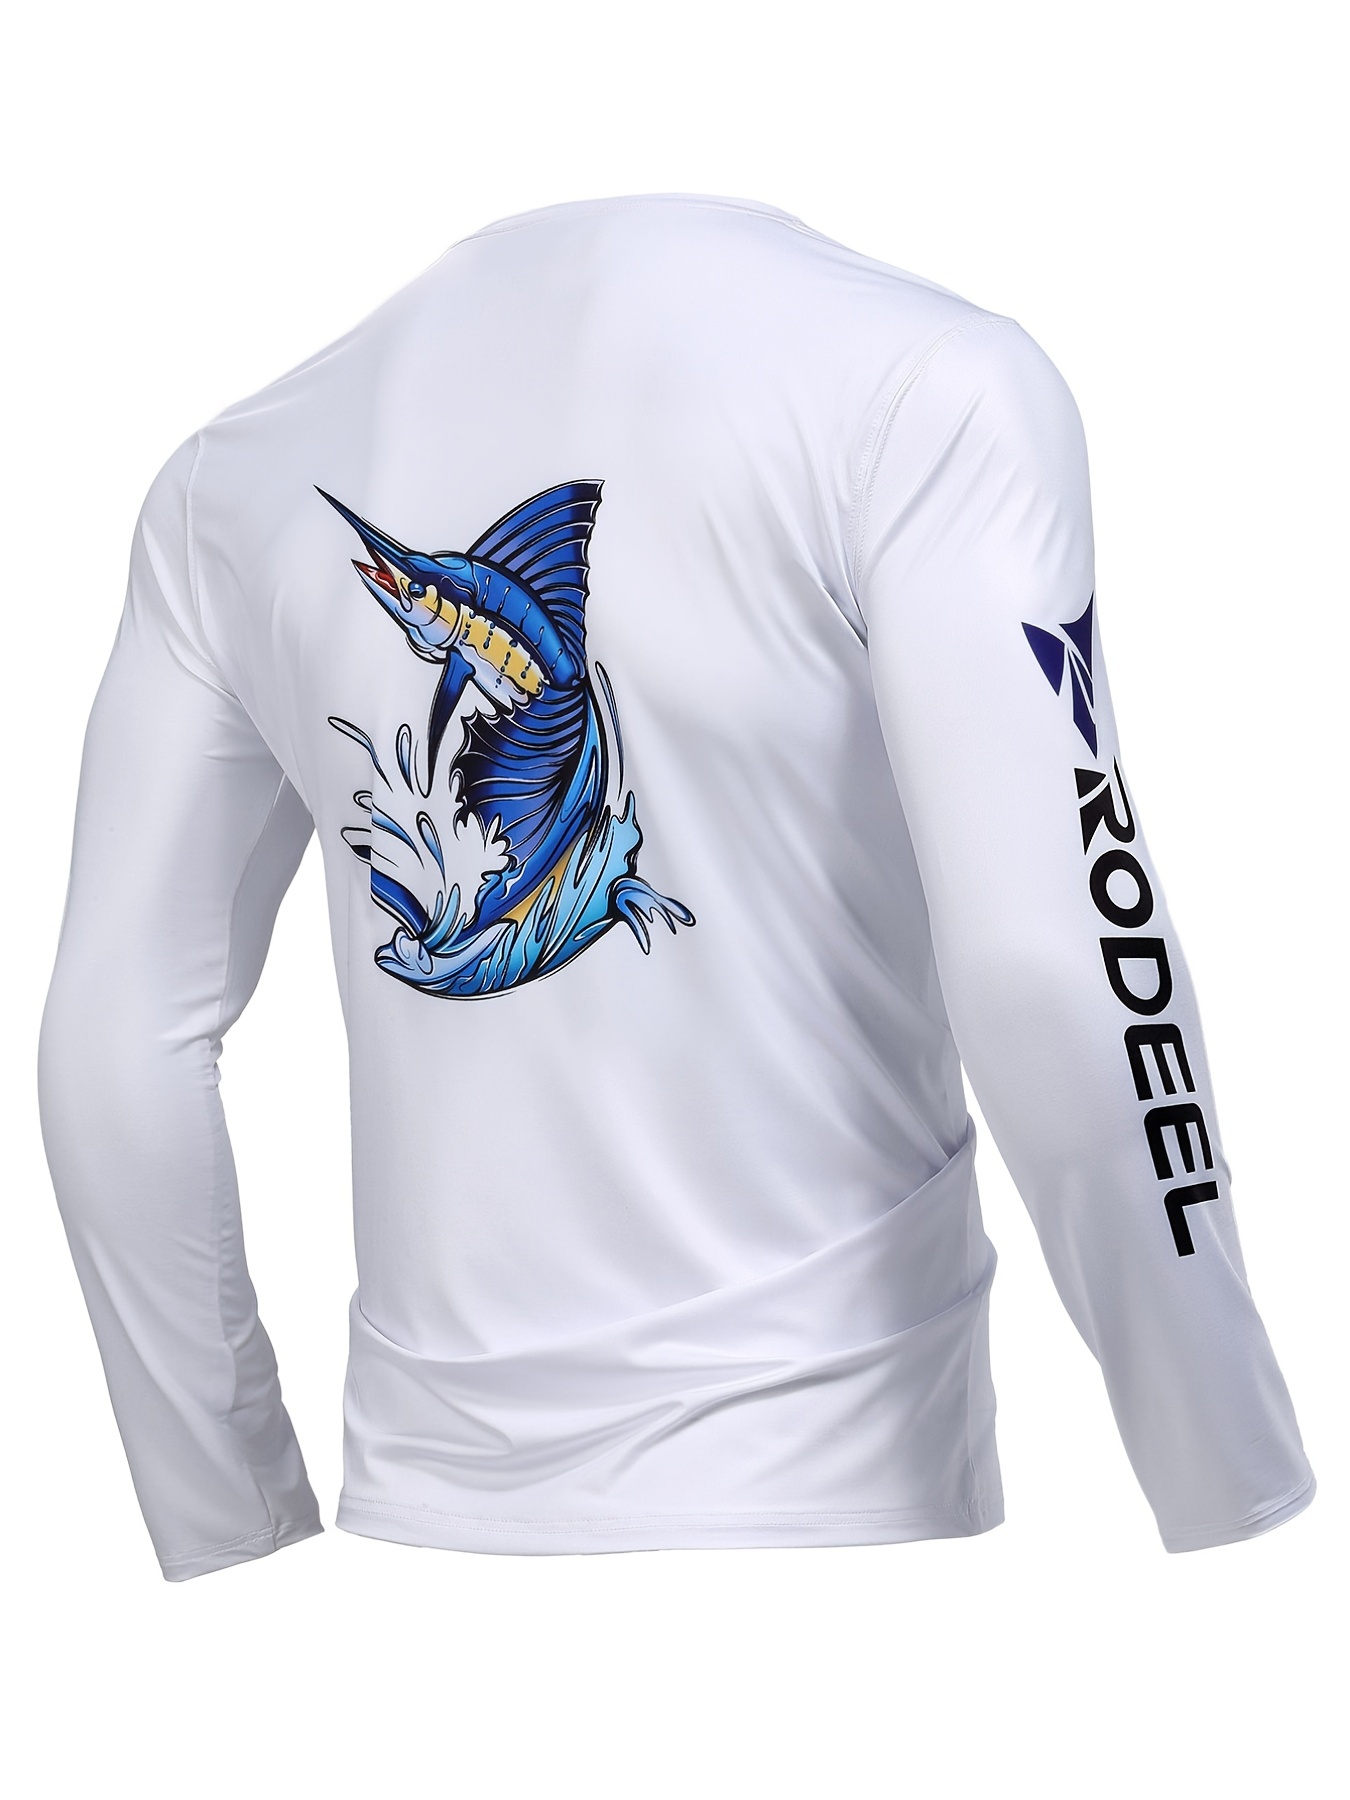 AIMTYD Fishing T Shirts for Men UV Sun Protection UPF 50+ Long Sleeve Tee  TAIMTYD Shirt 